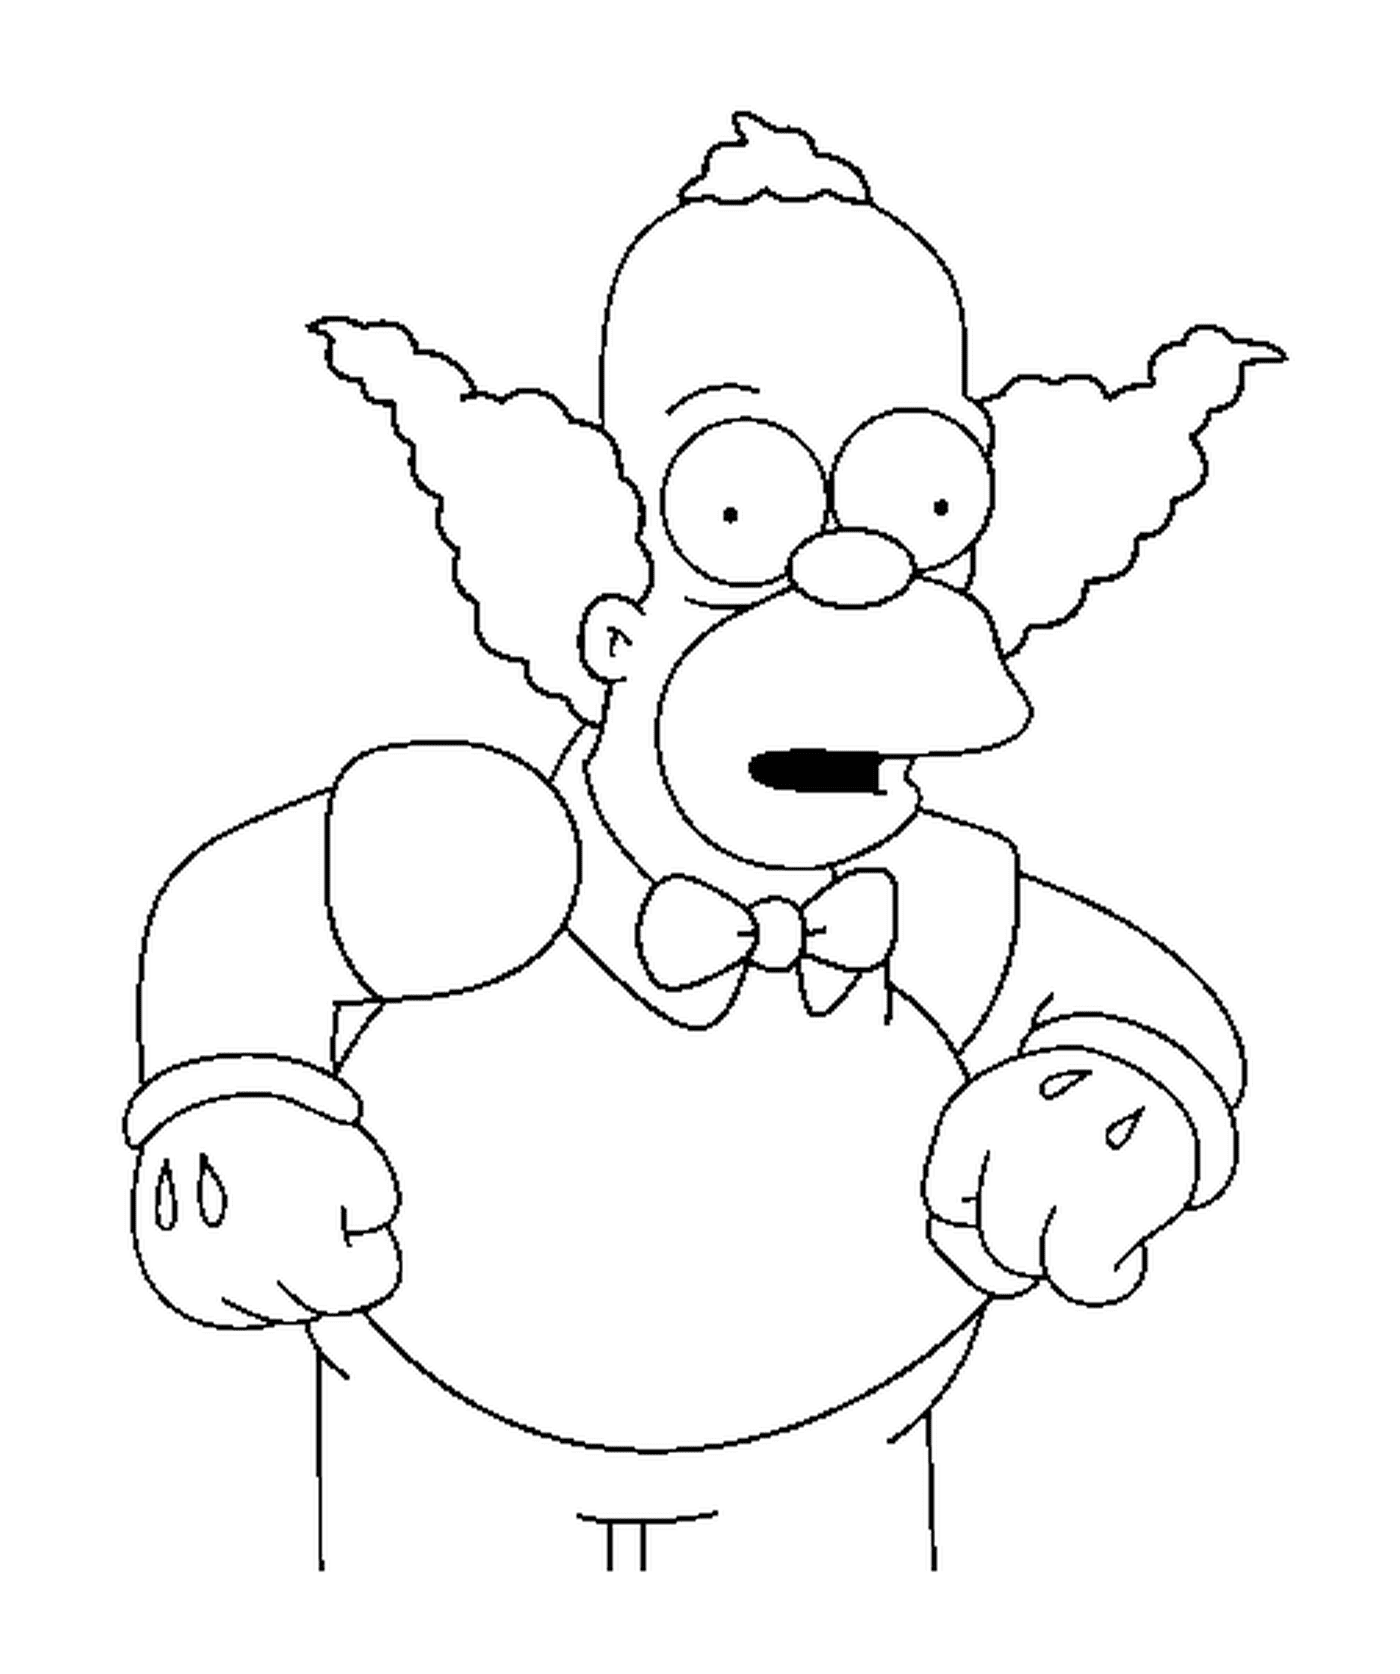  Krusty o palhaço Simpson 